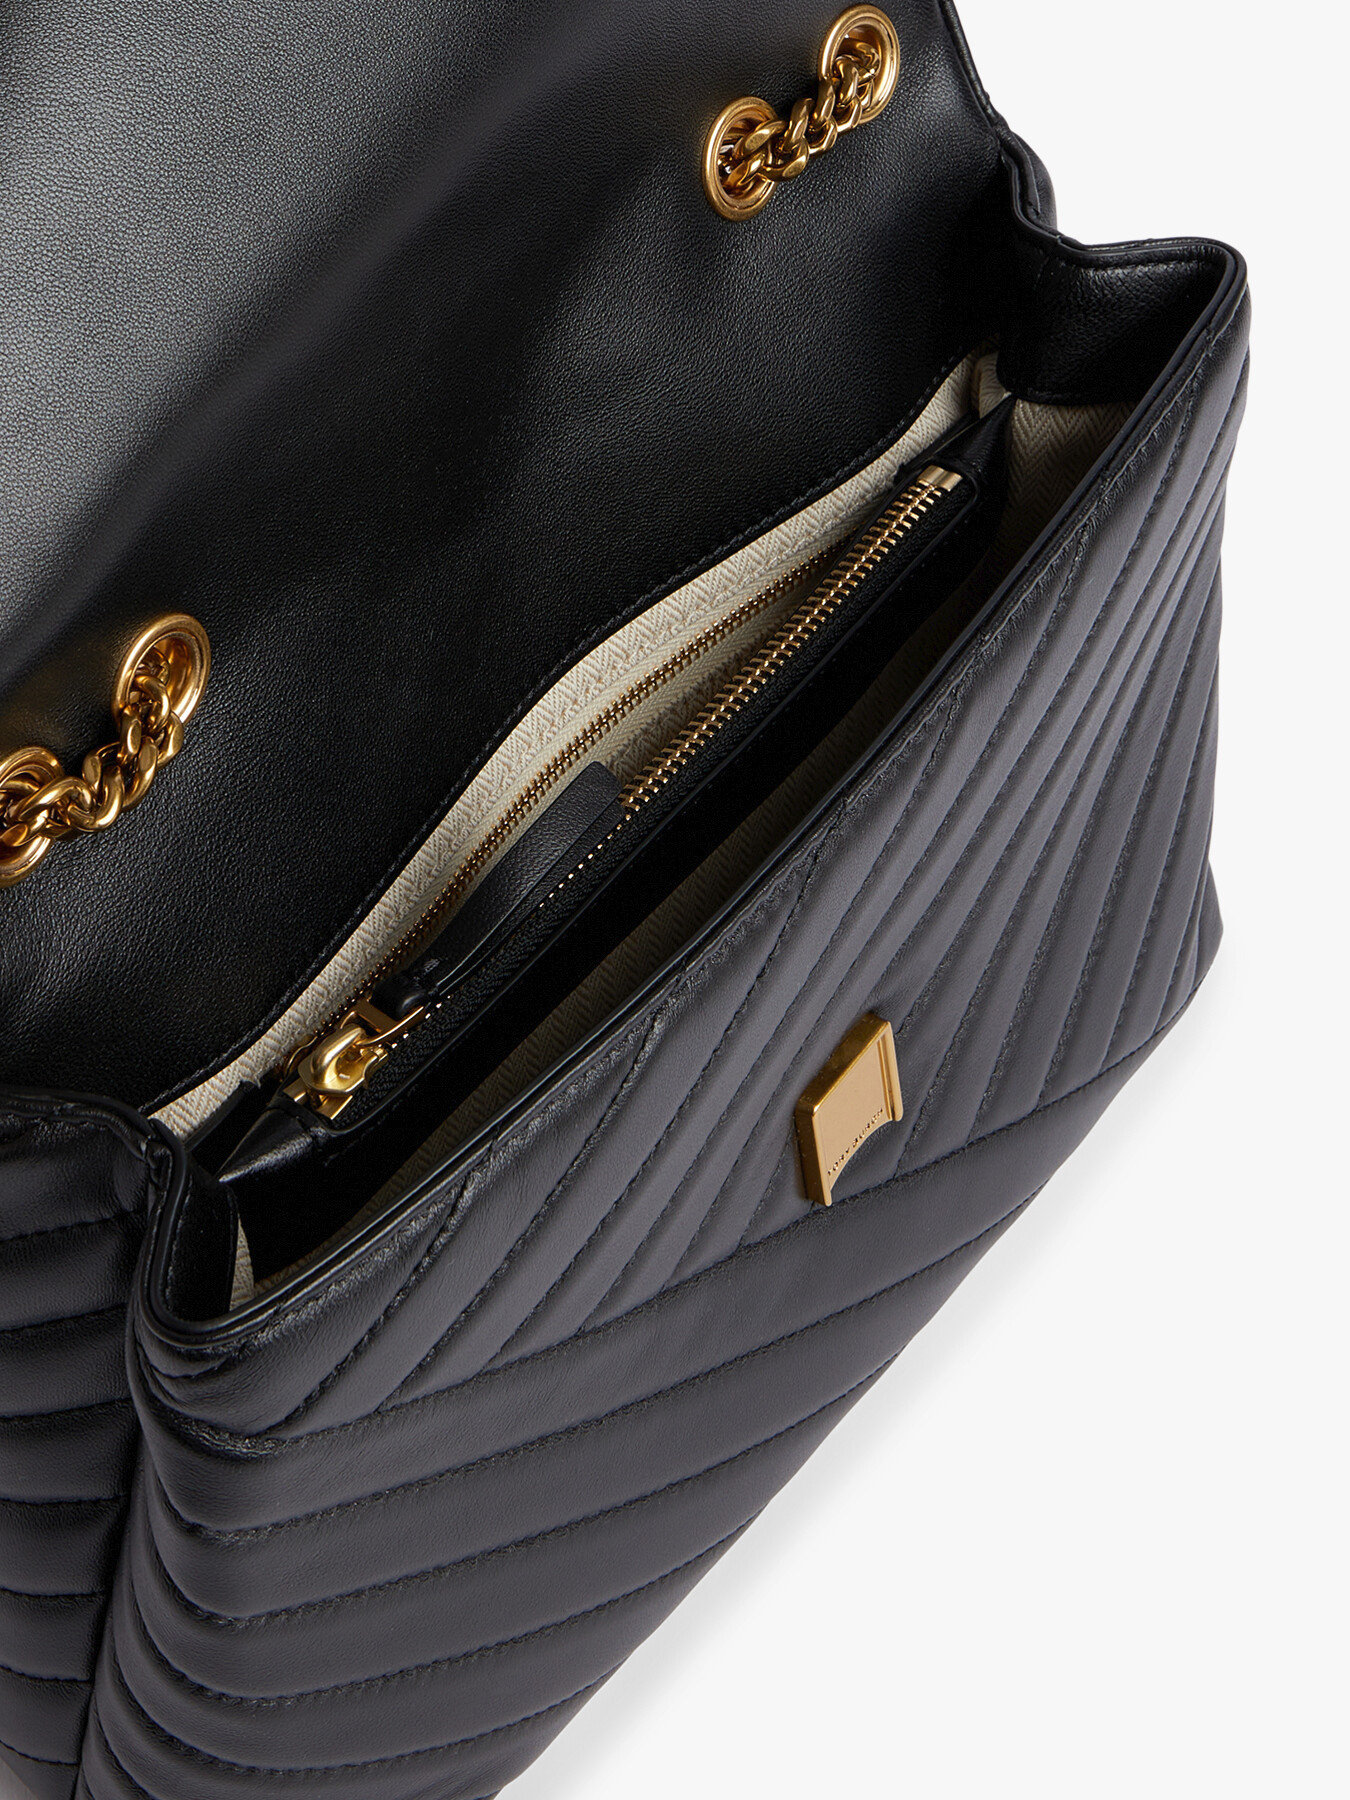 PRE ORDER NOW ! ▪️Tory burch kira chevron small convertible shoulder bag  ▪️RM850 Only ! 😉 ▪️Deposit RM300 ▪️2X Installments ! 🙃 ▪️To…